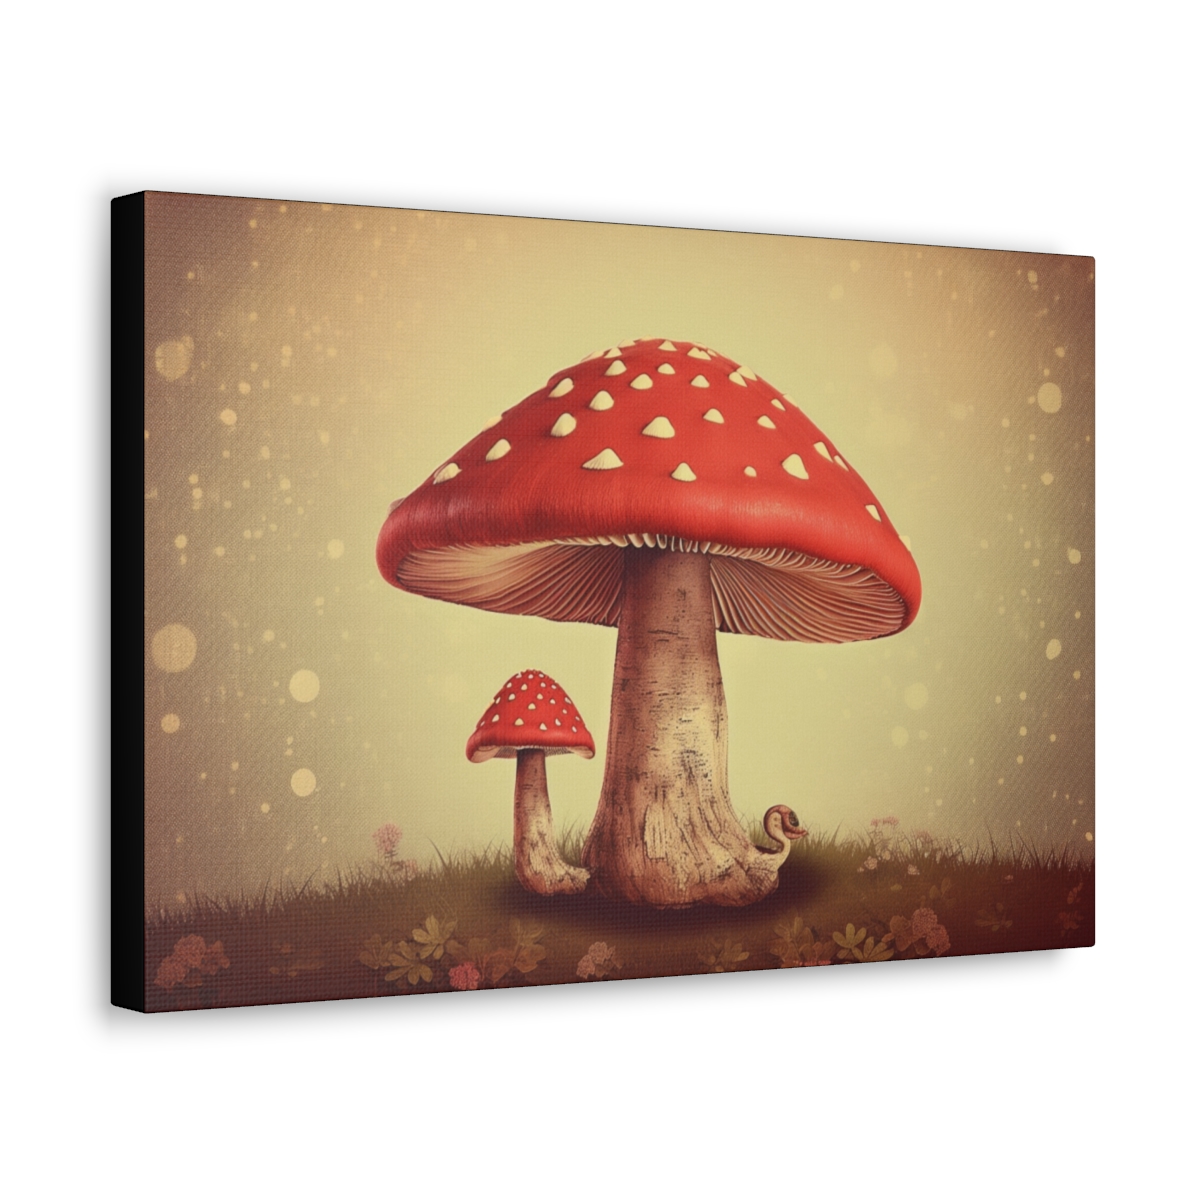 Mushroom Art Canvas Print: Enchanted Fungi